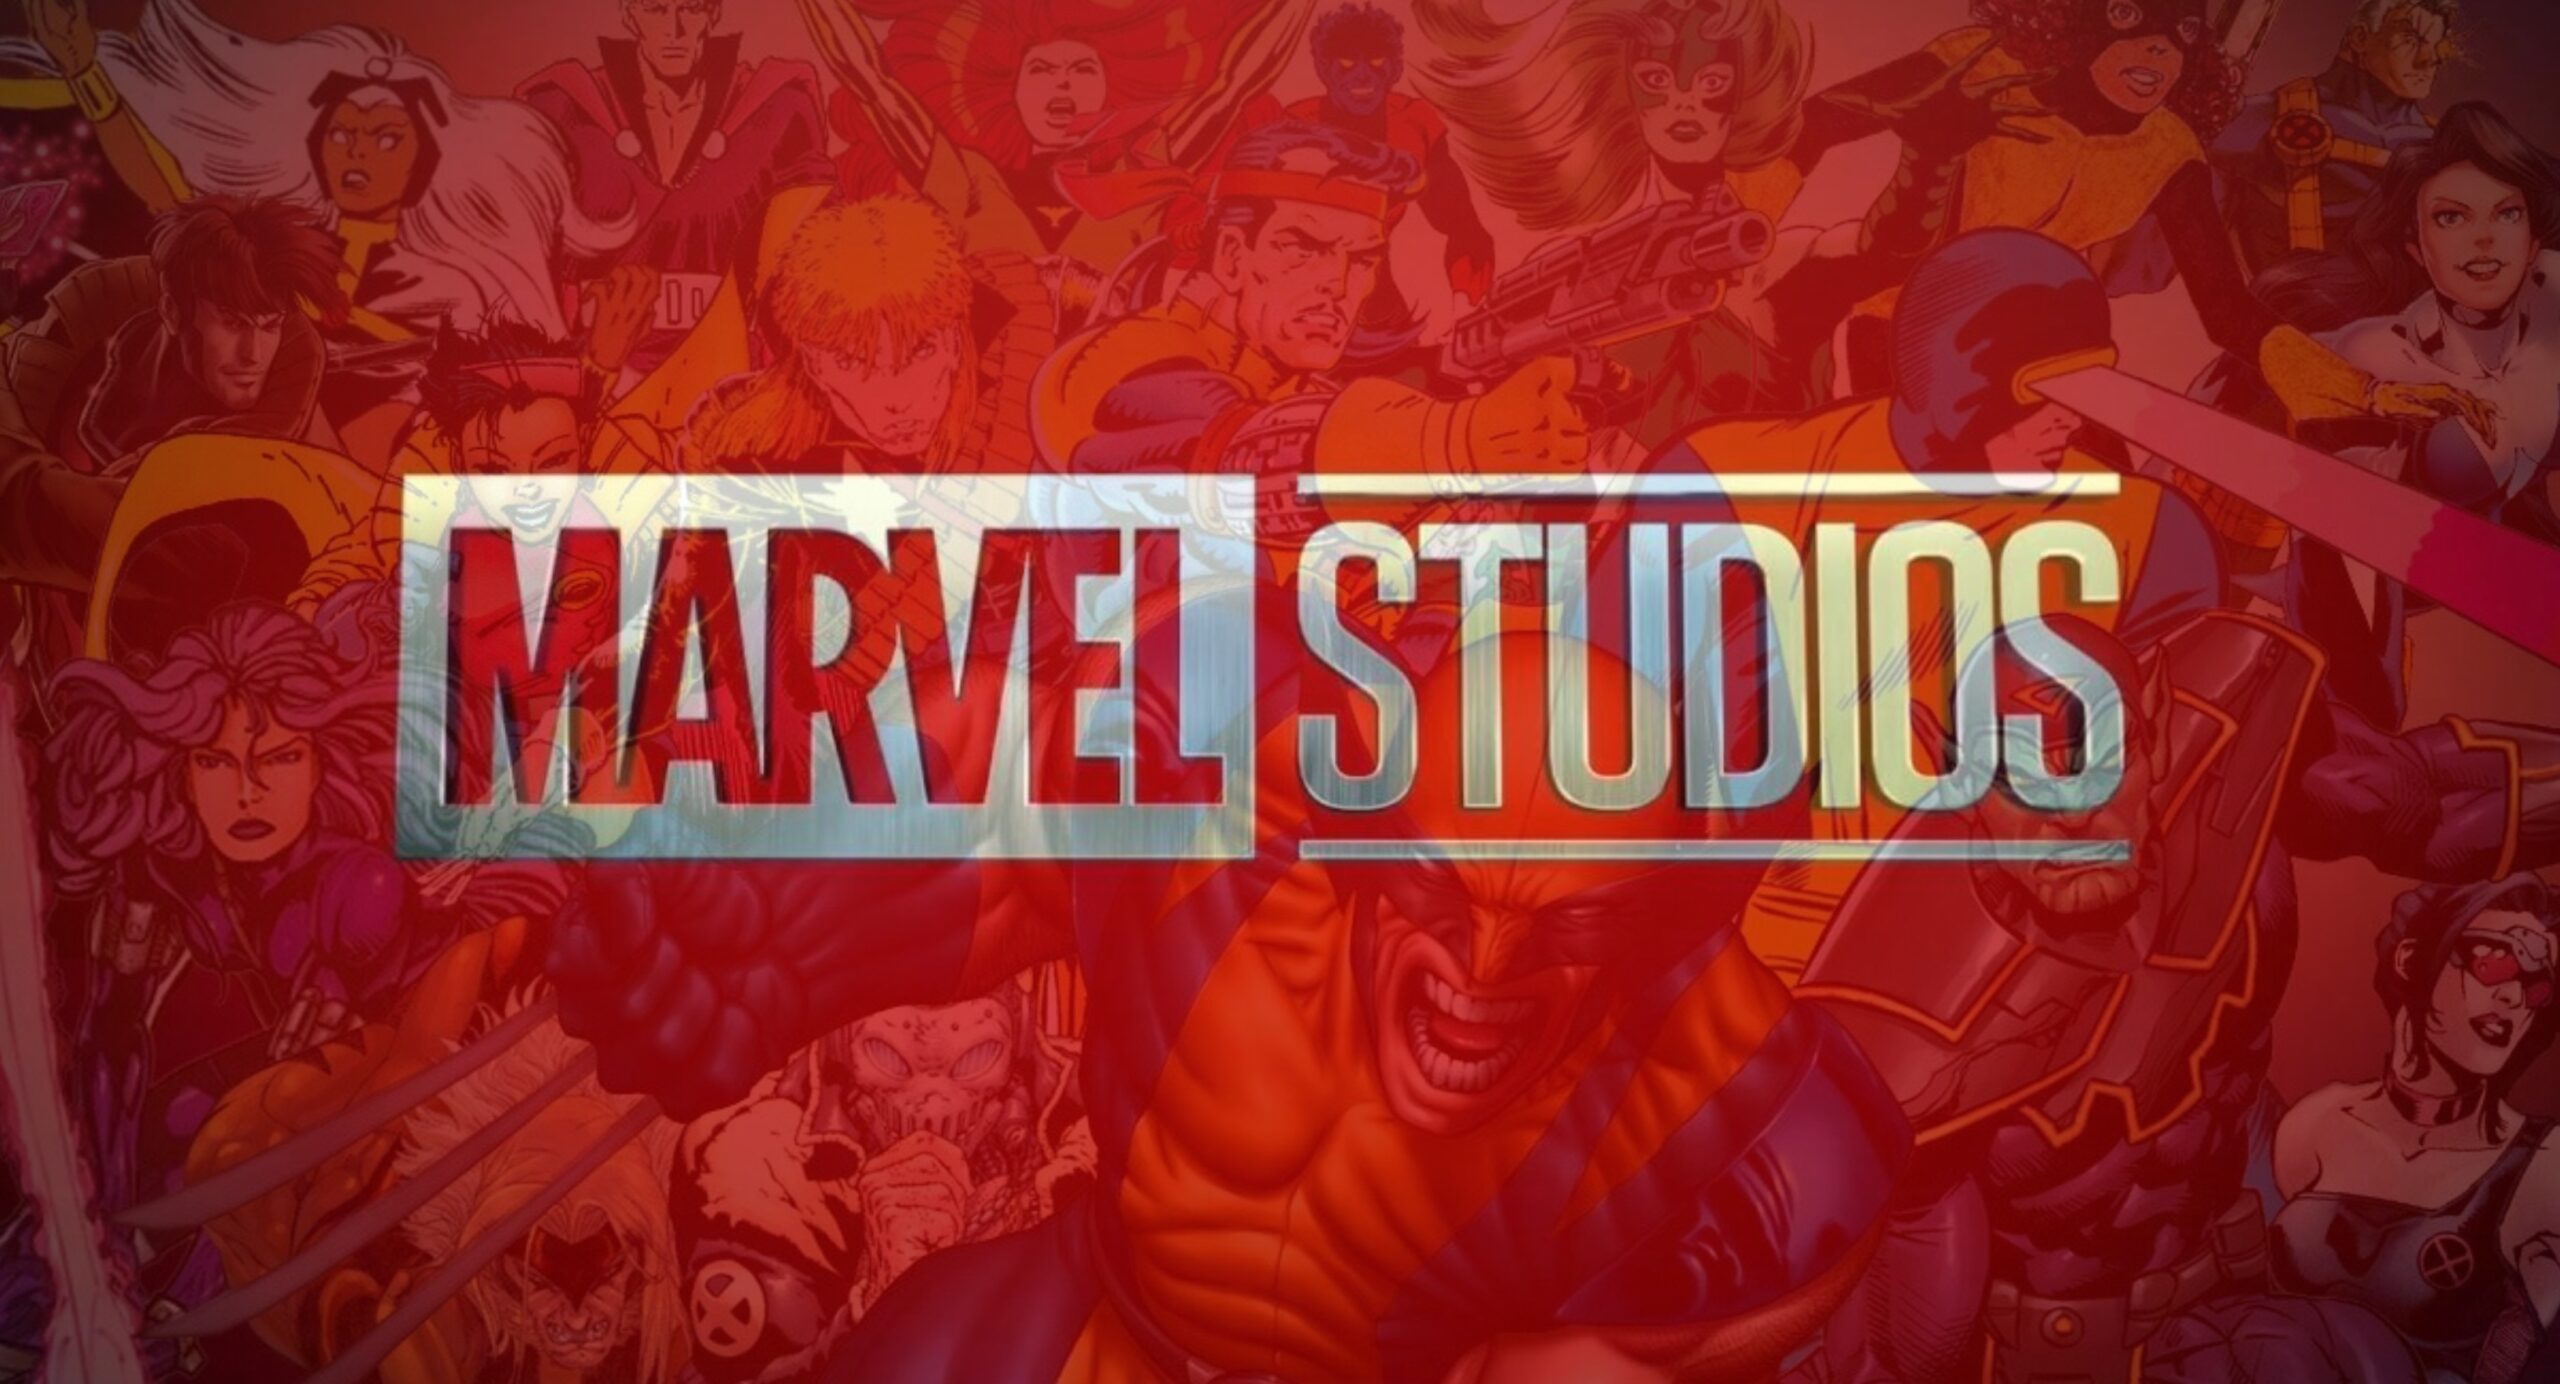 Marvel Studios Logo with X-Men overlay